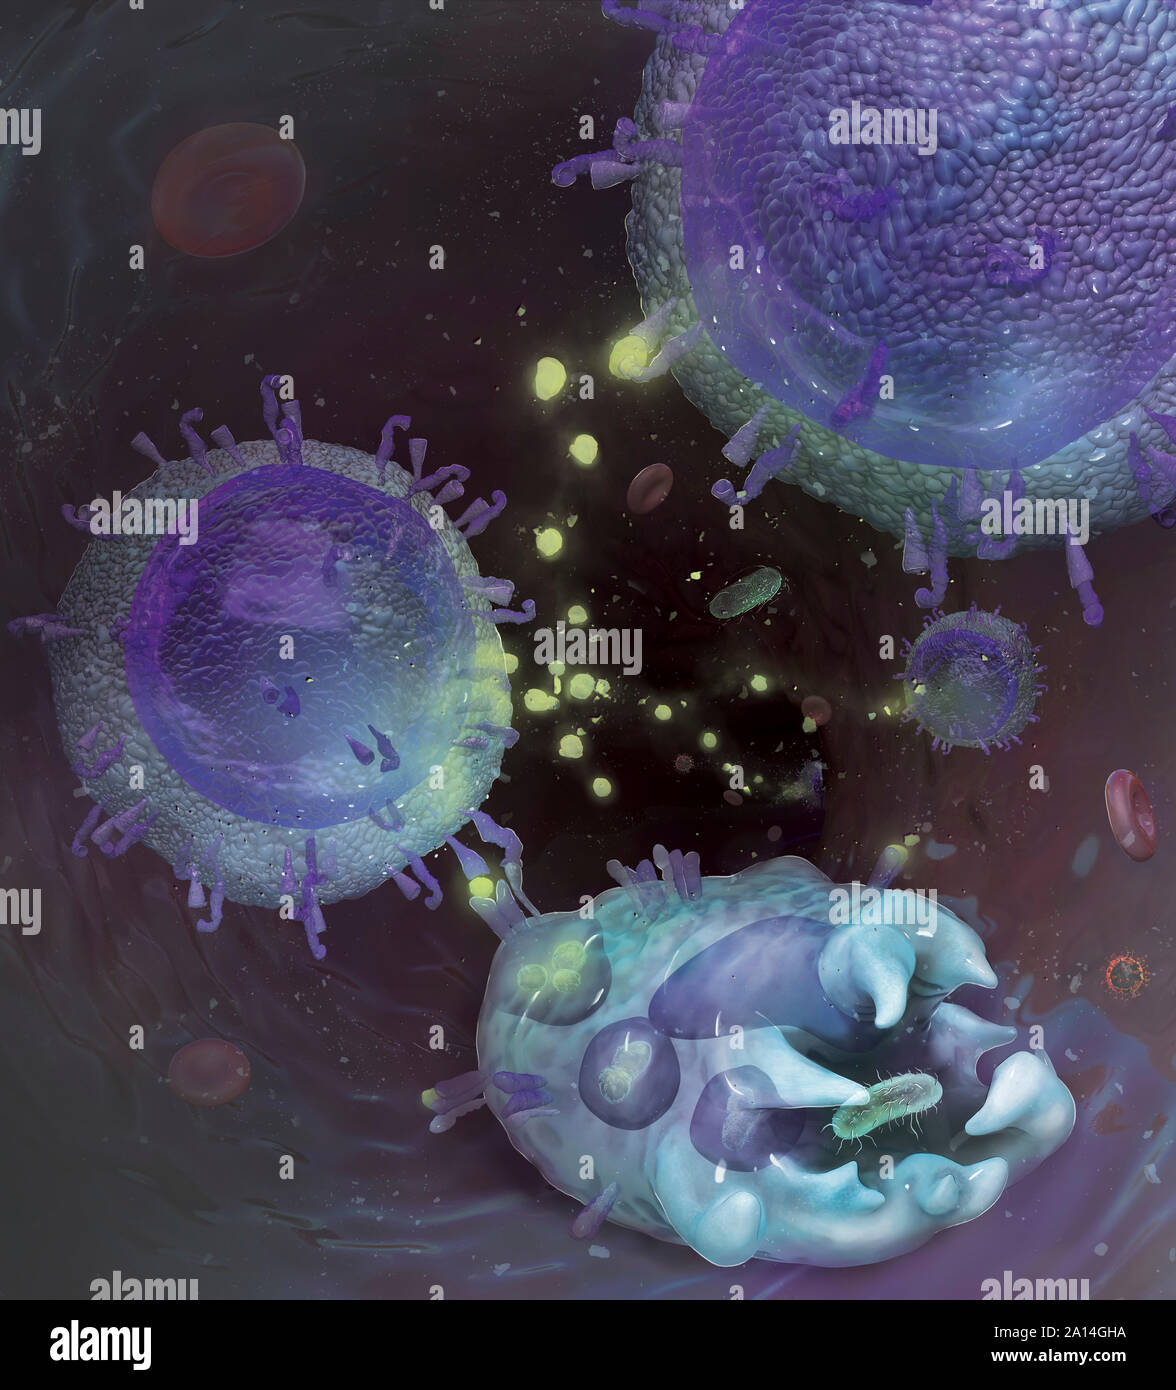 Medical illustration depicting immune system interaction at cellular level. Stock Photo